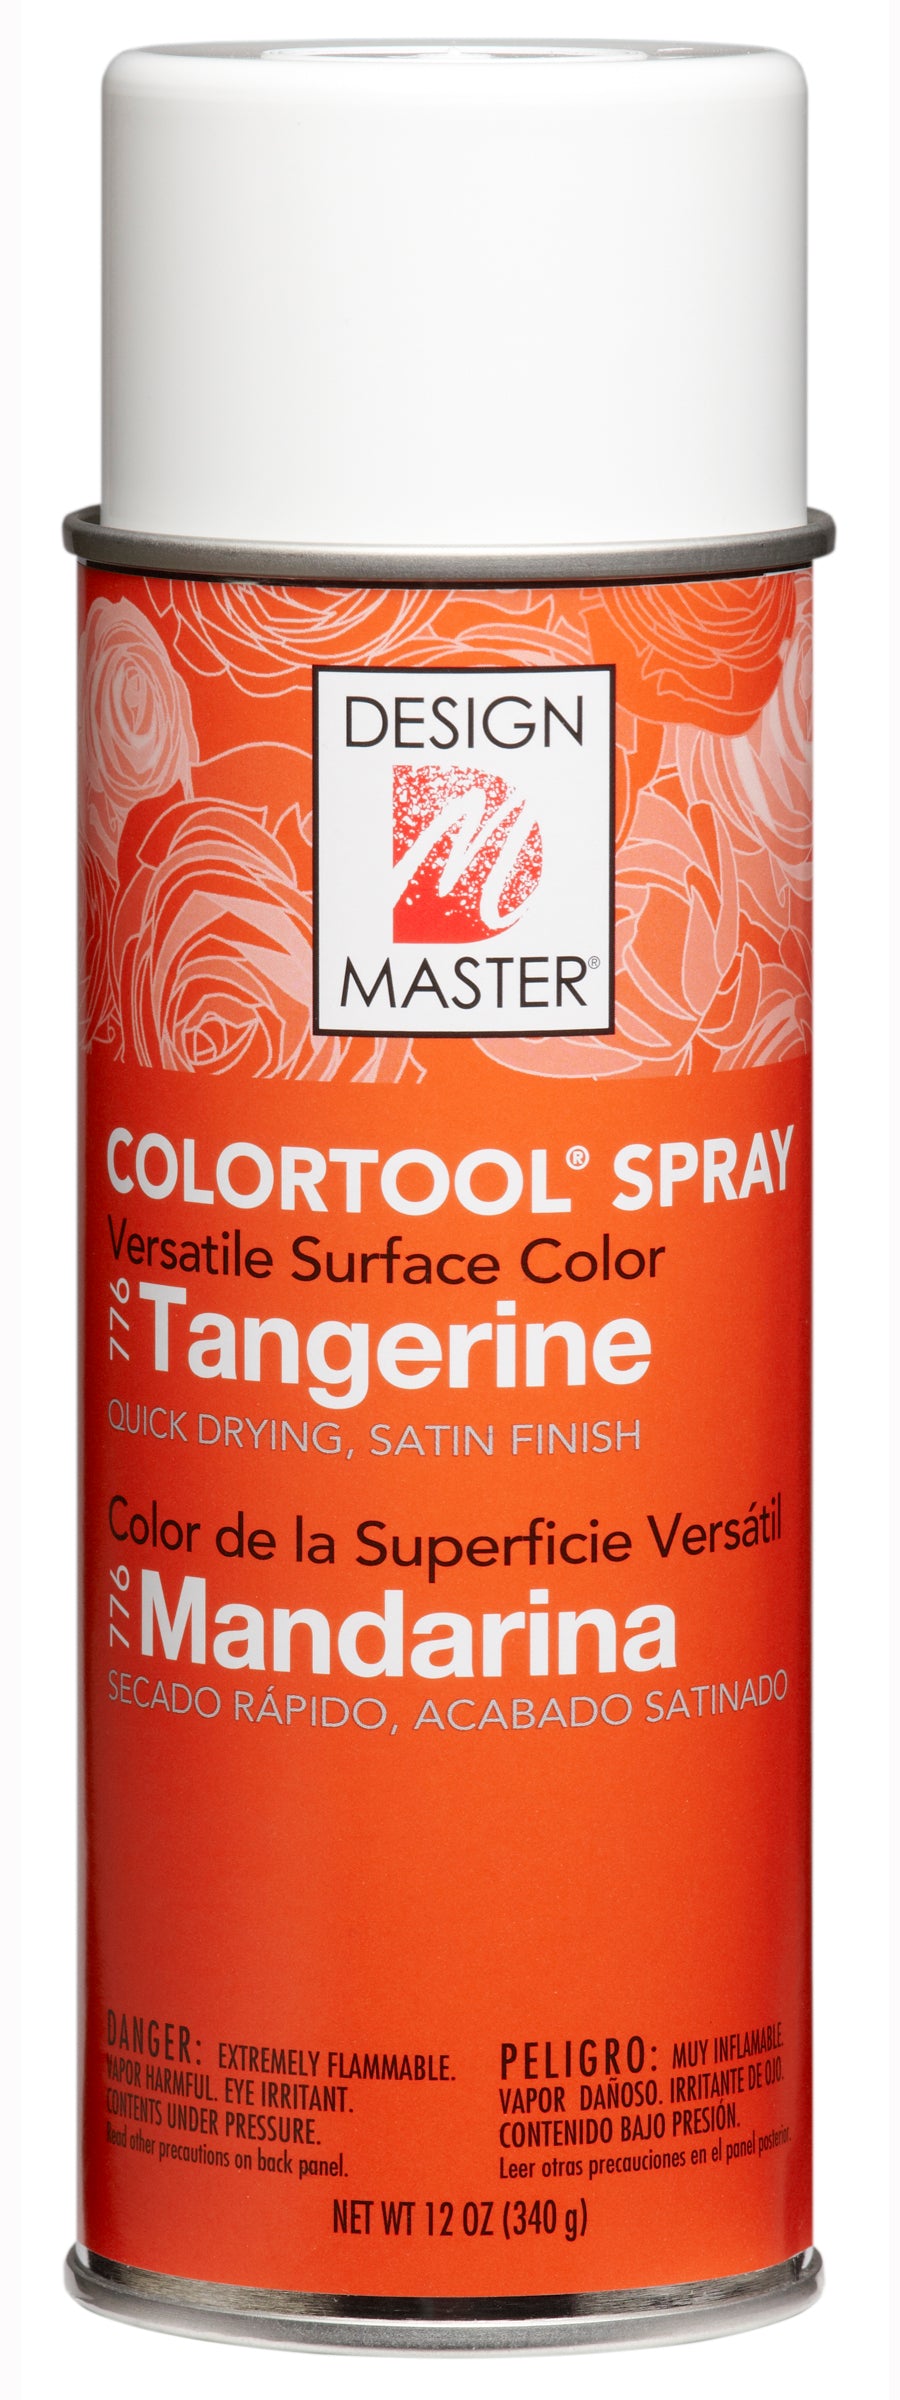 Design Master Colortool Spray-Tangerine